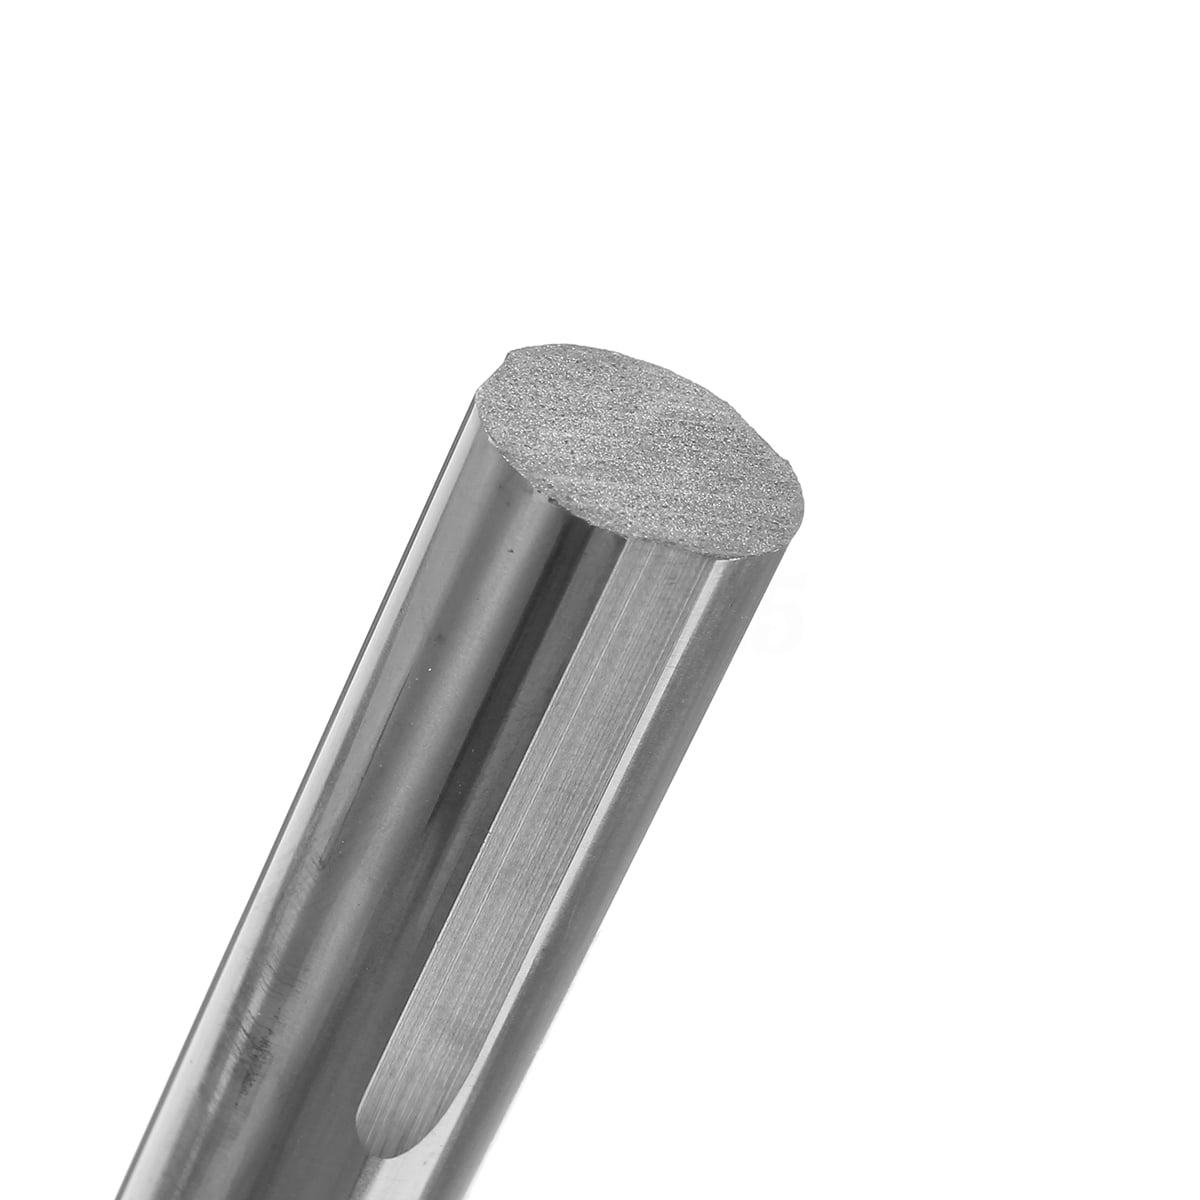 4.5mm High Quality Carbon Steel Nail Drill Bit Low-speed Flat Tire